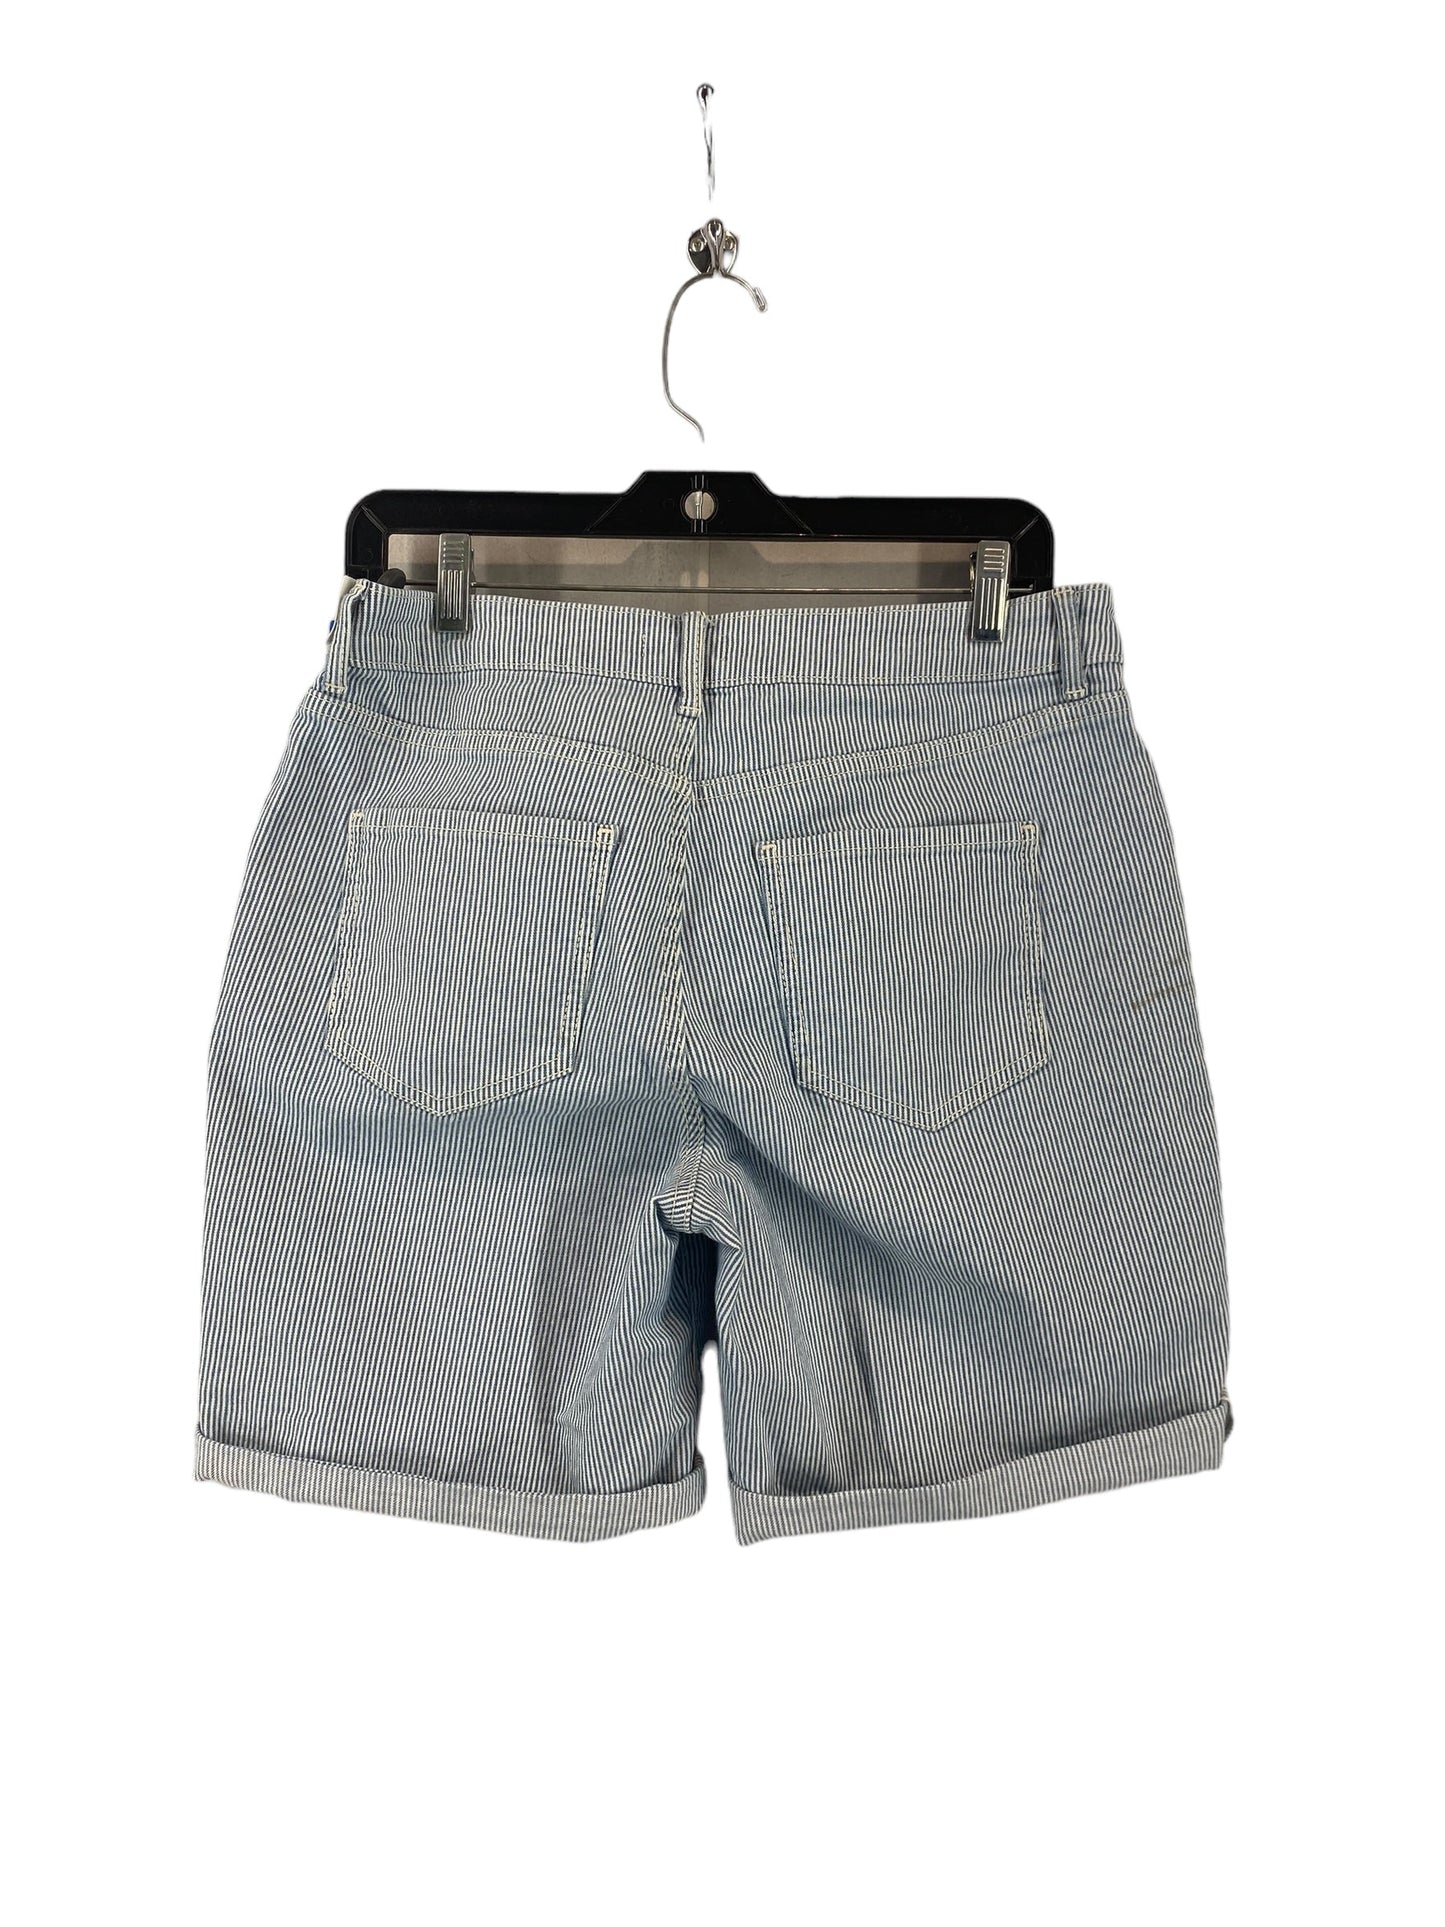 Blue Denim Shorts Croft And Barrow, Size 10